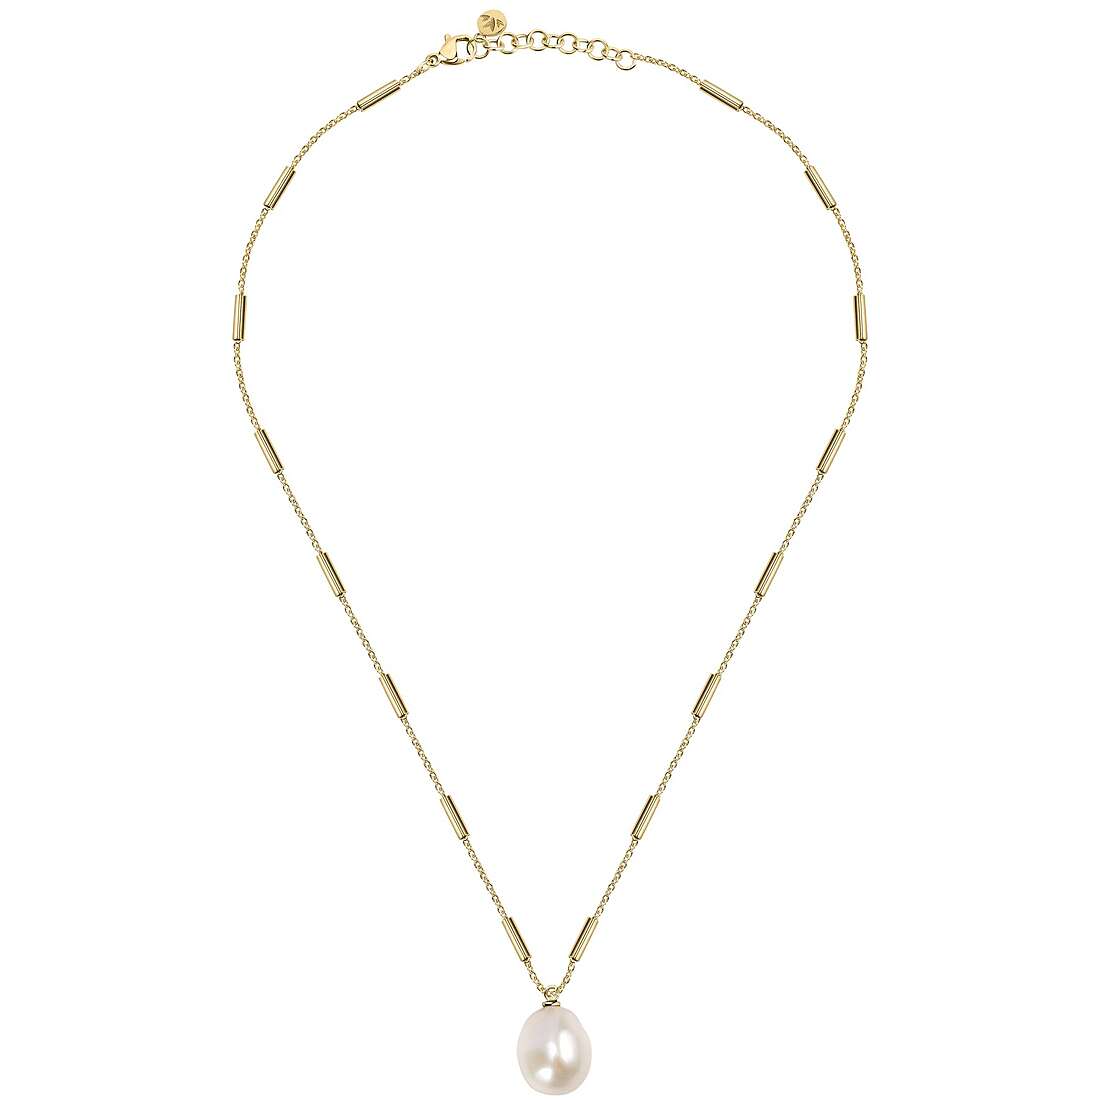 collier avec des perles Morellato Oriente pour femme SARI03